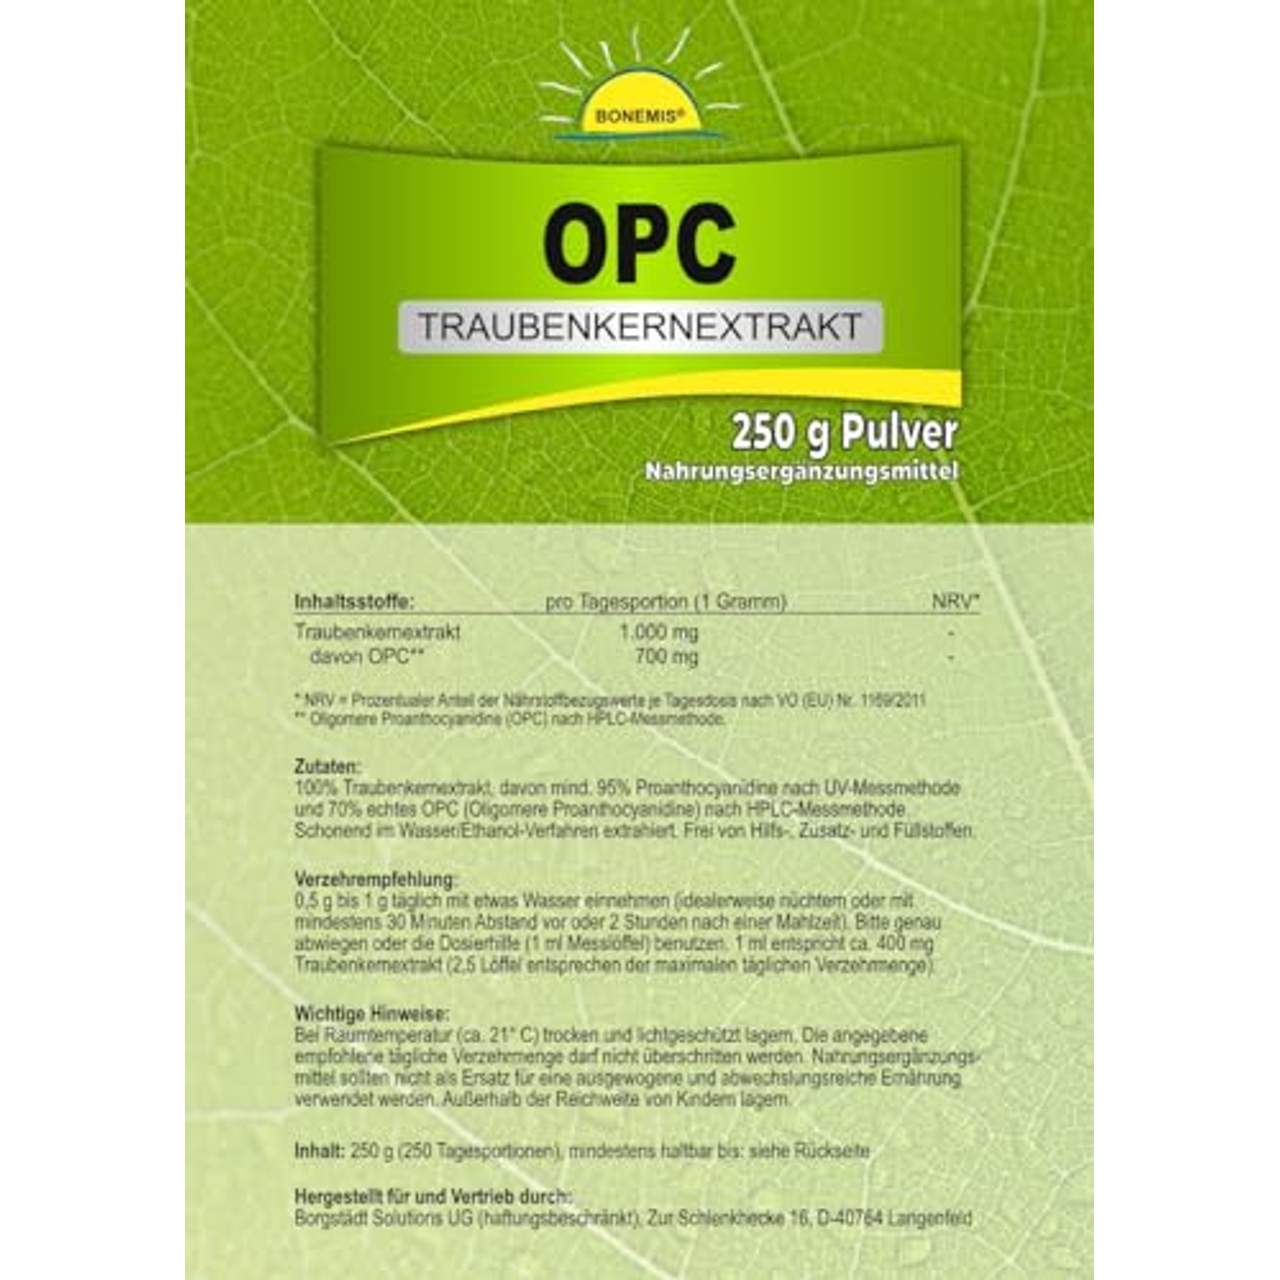 Bonemis Premium OPC Traubenkernextrakt